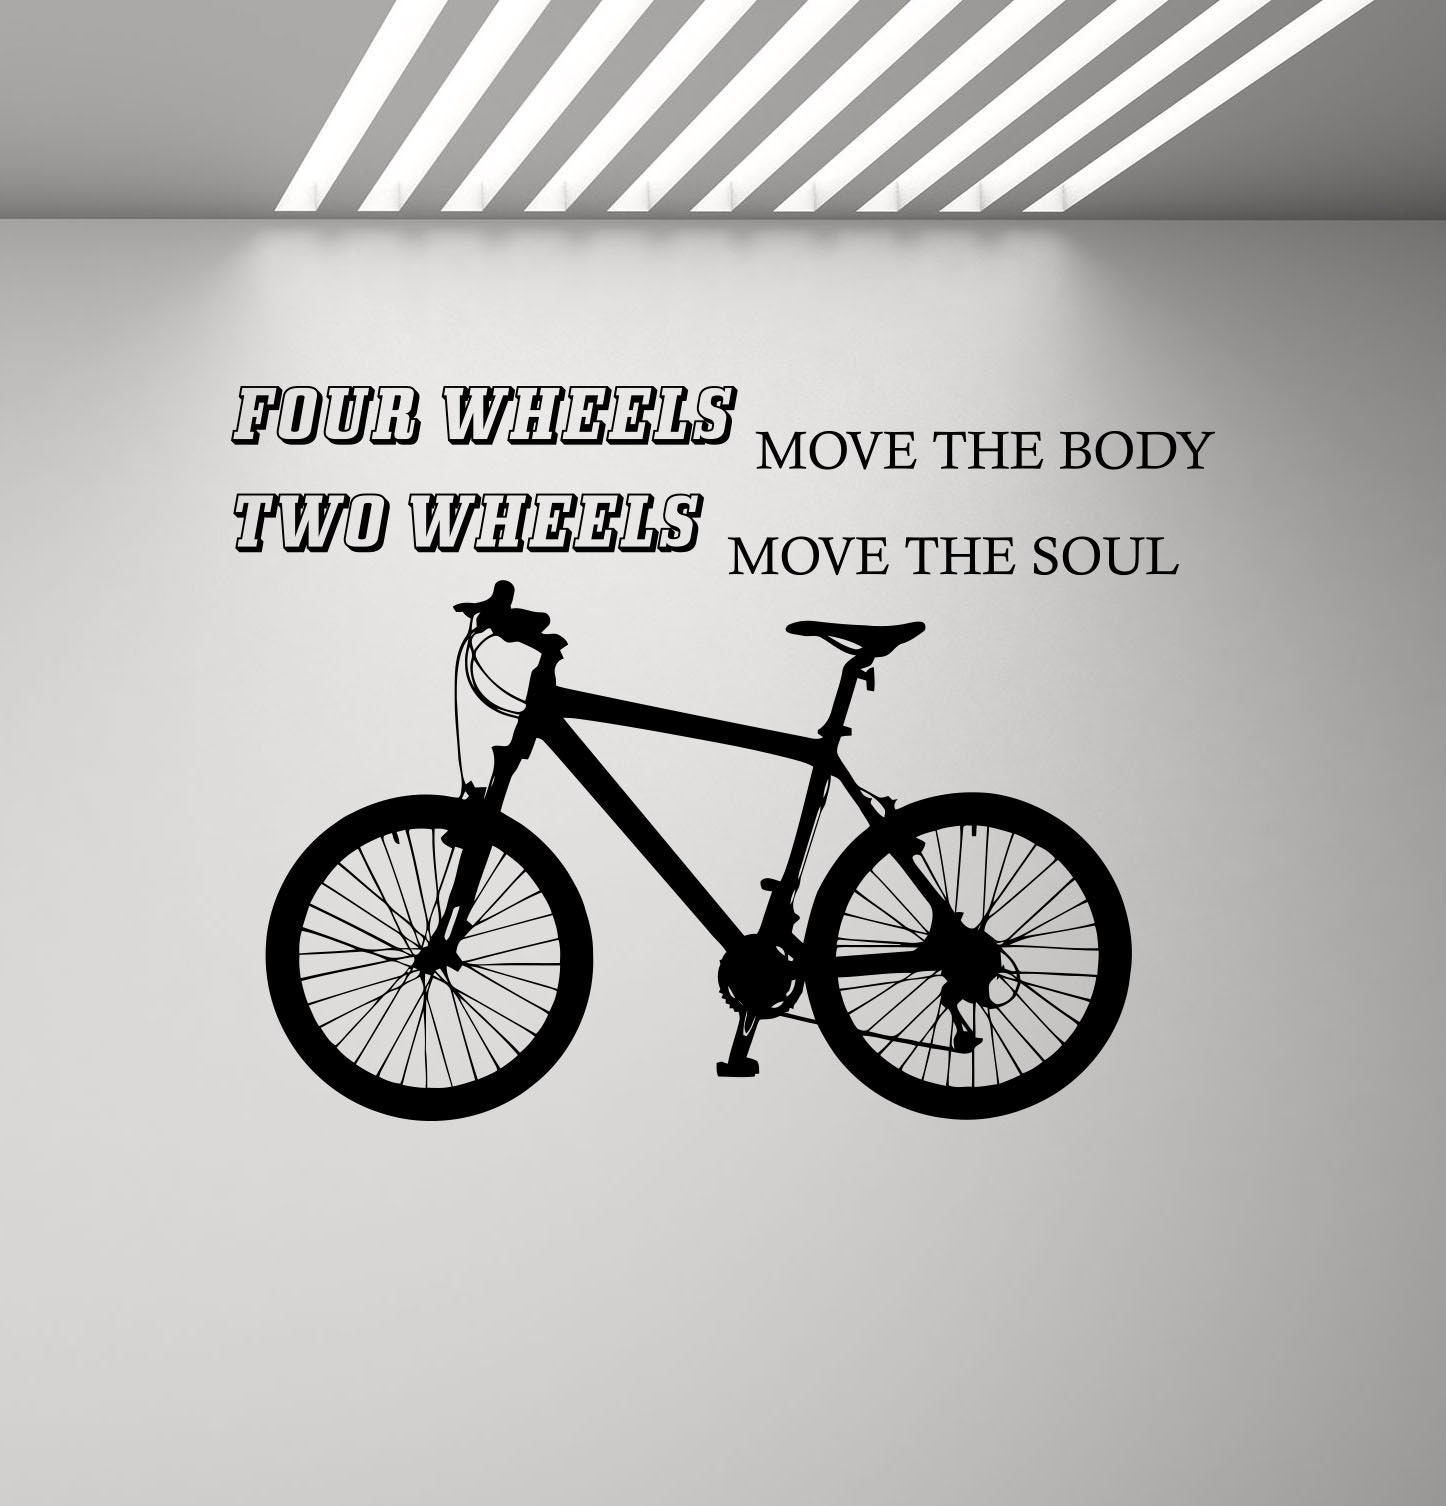 Bmx Wall Stickers Boys Bike Vinyl Transfer Pushbike Bicycle Stunt Xtreme Graphic